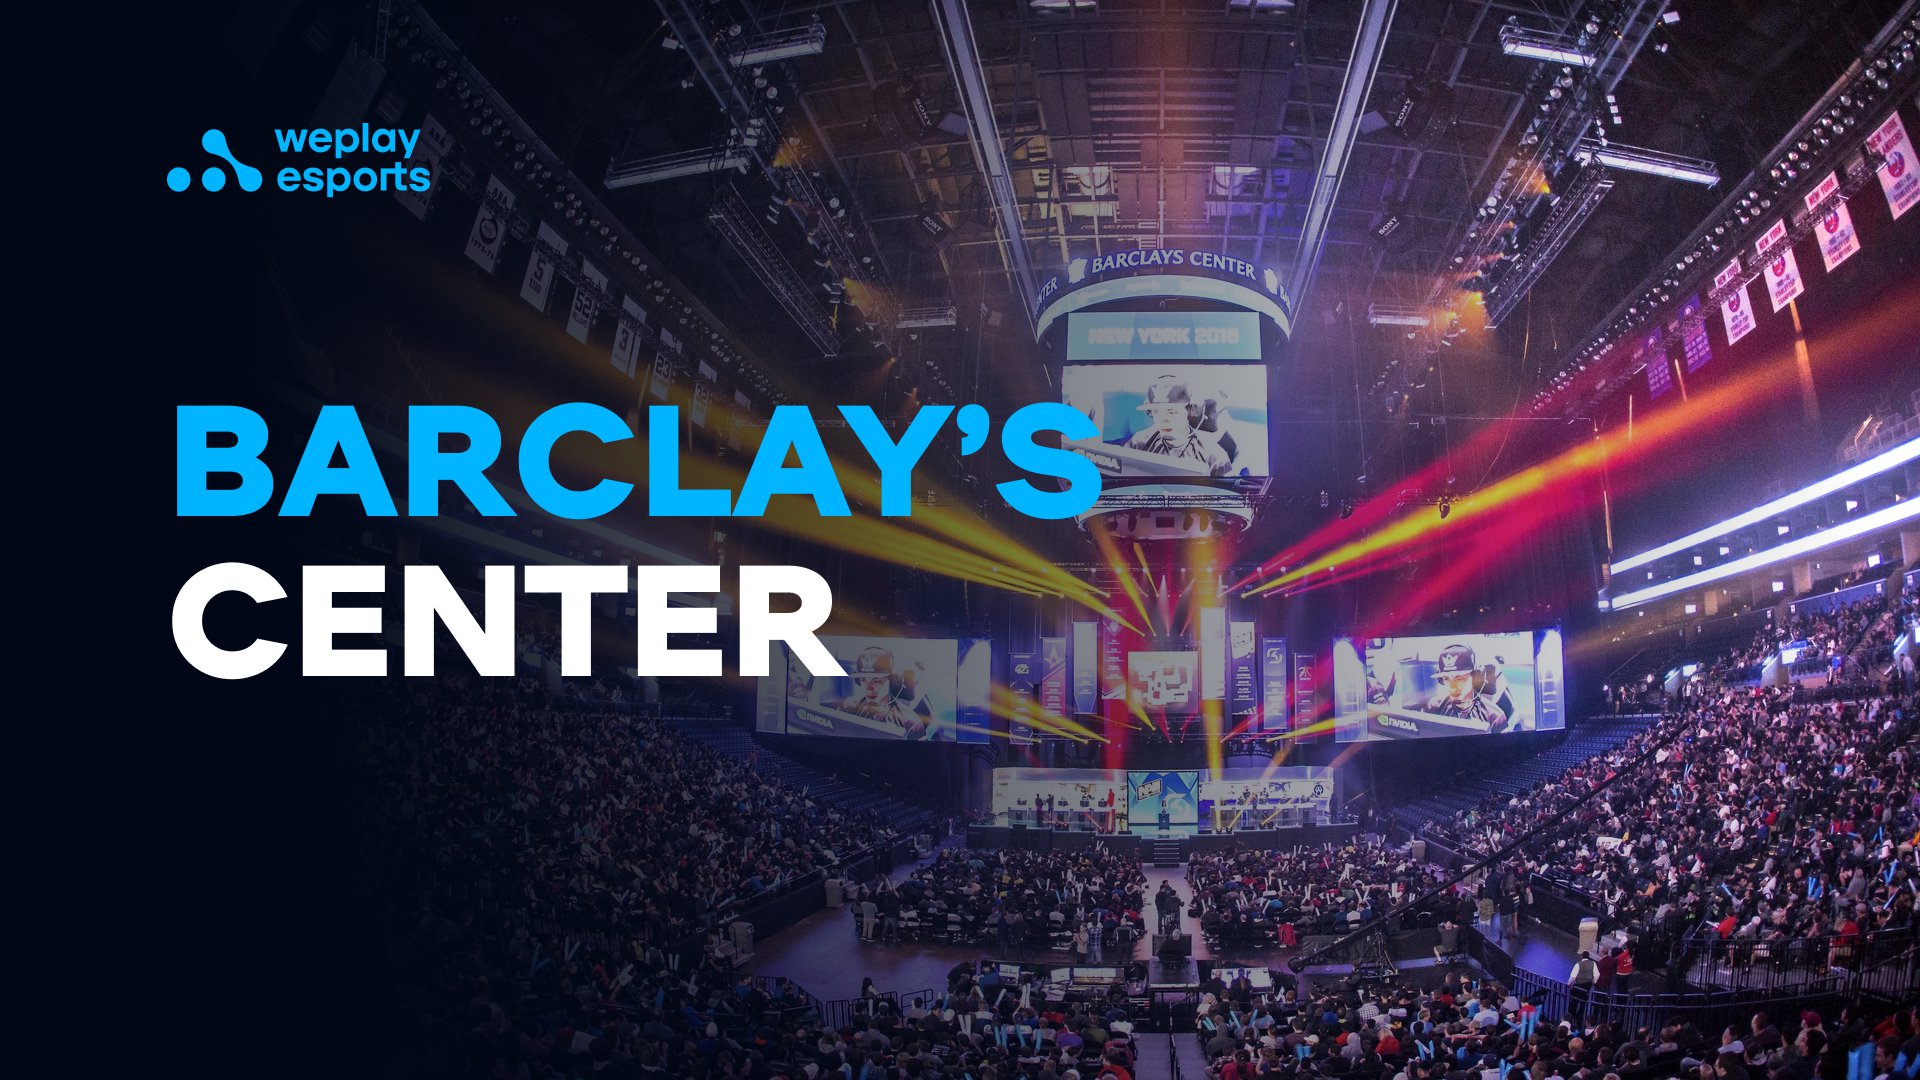 Barclay’s Center